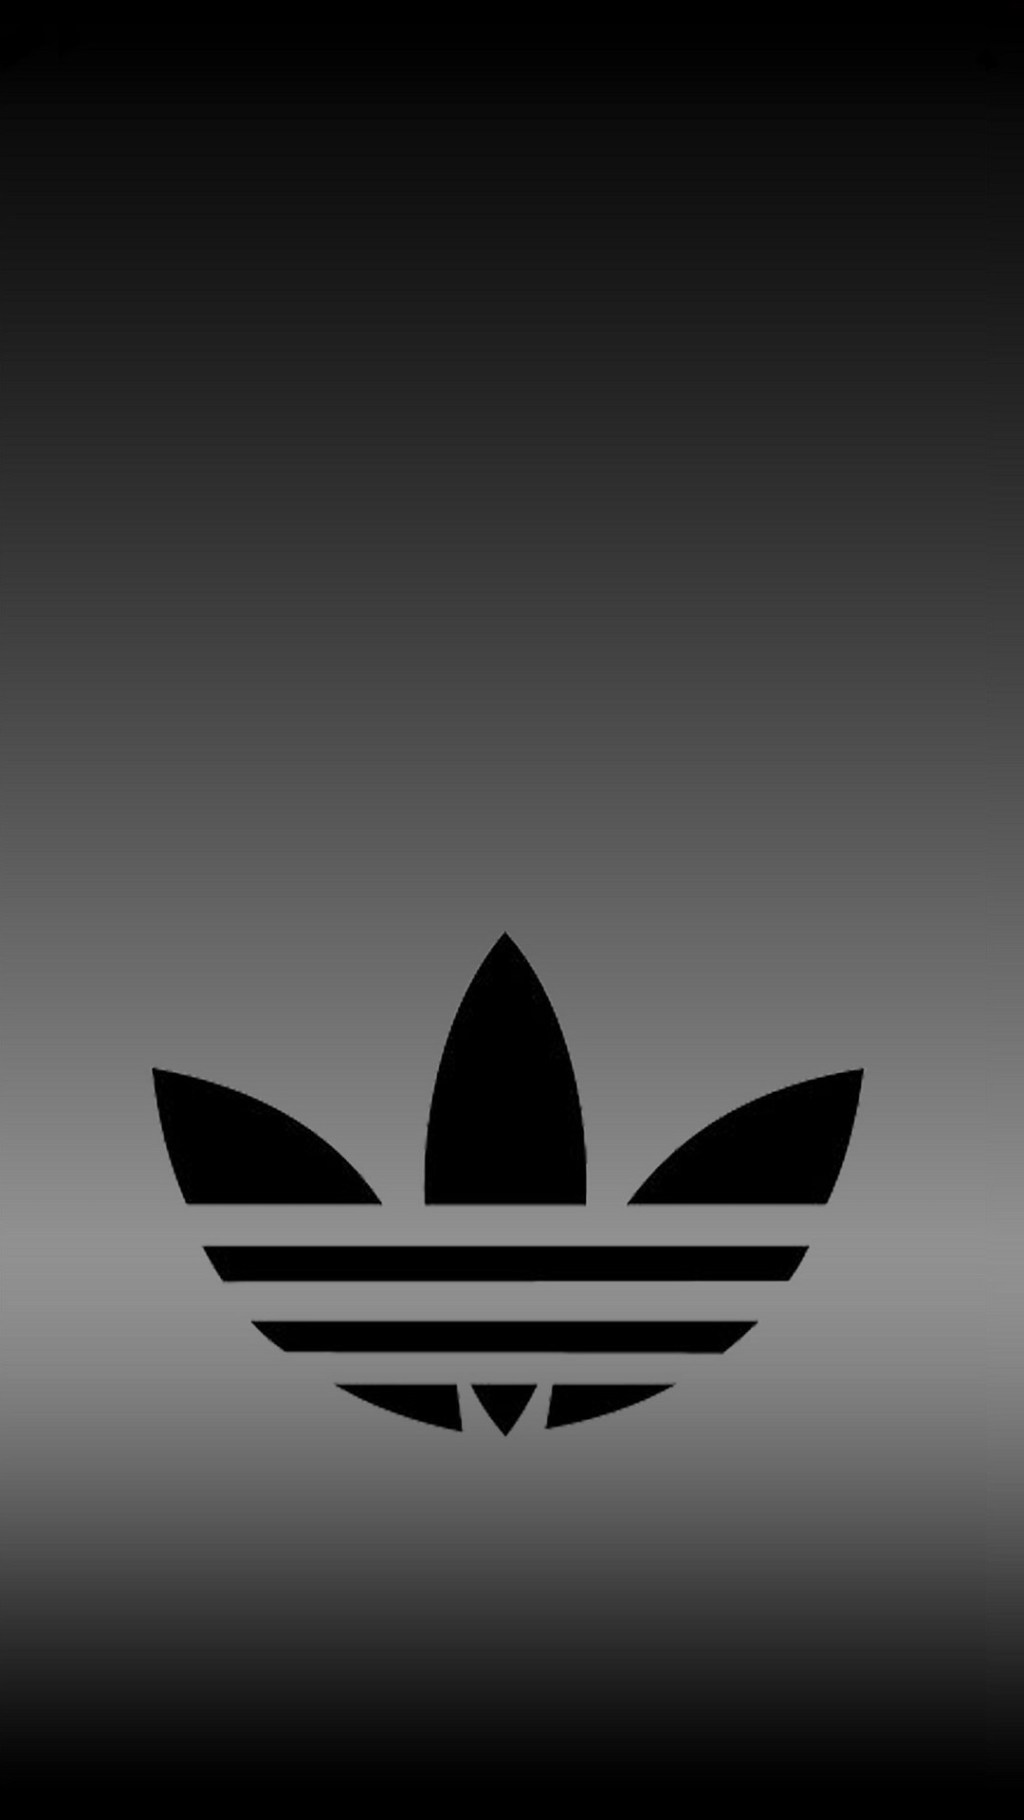 3D iPhone Wallpaper on X Adidas Logo iPhone 6 Wallpaper  httpstcocc78h9TfOZ httpstcoIV5uq08kBy  X